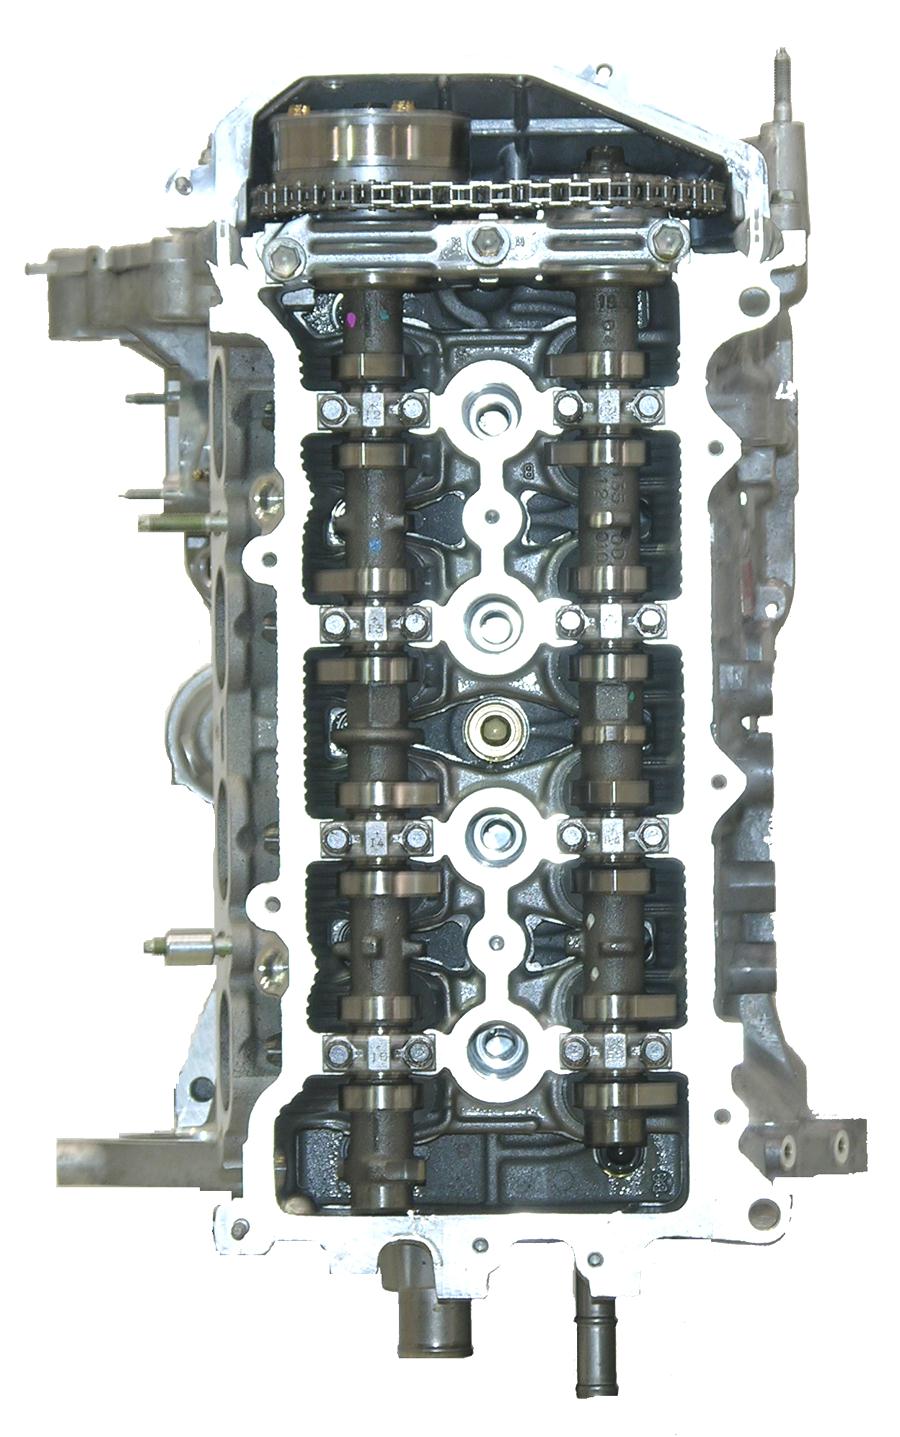 Toyota 1ZZFE 1.8L L4 Remanufactured Engine - 8/99-2008